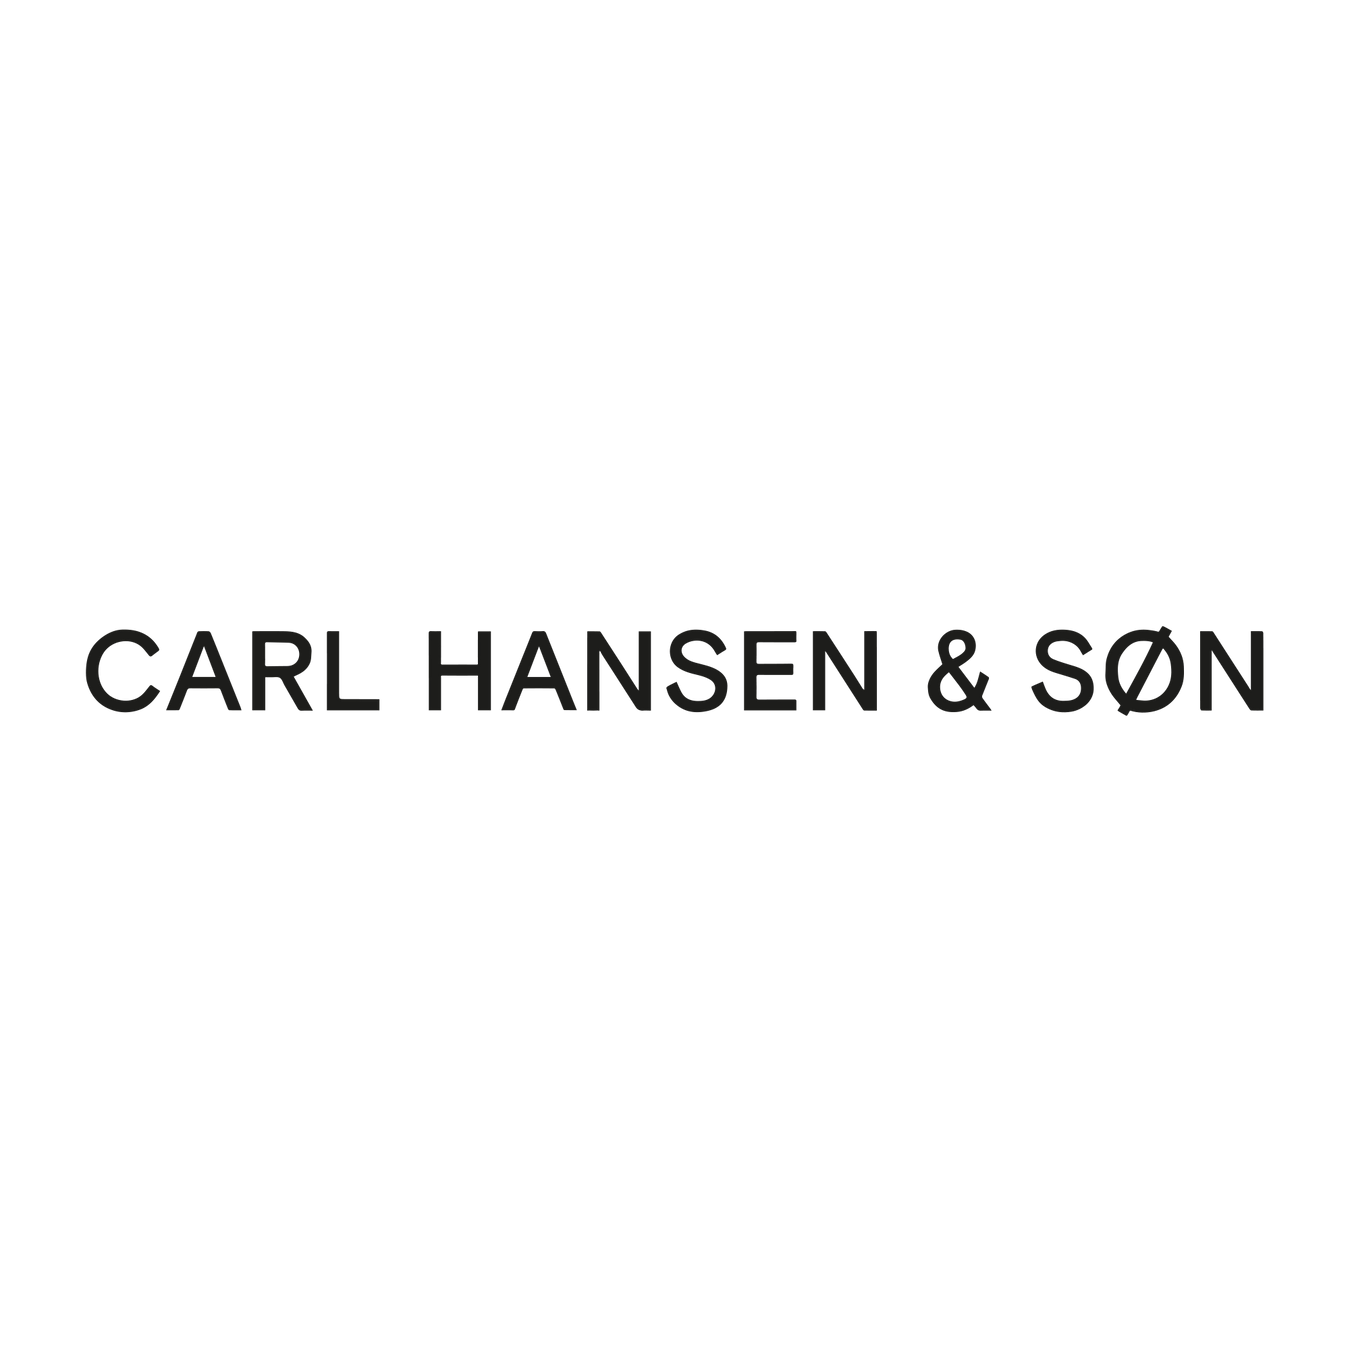 Carl Hansen & Søn